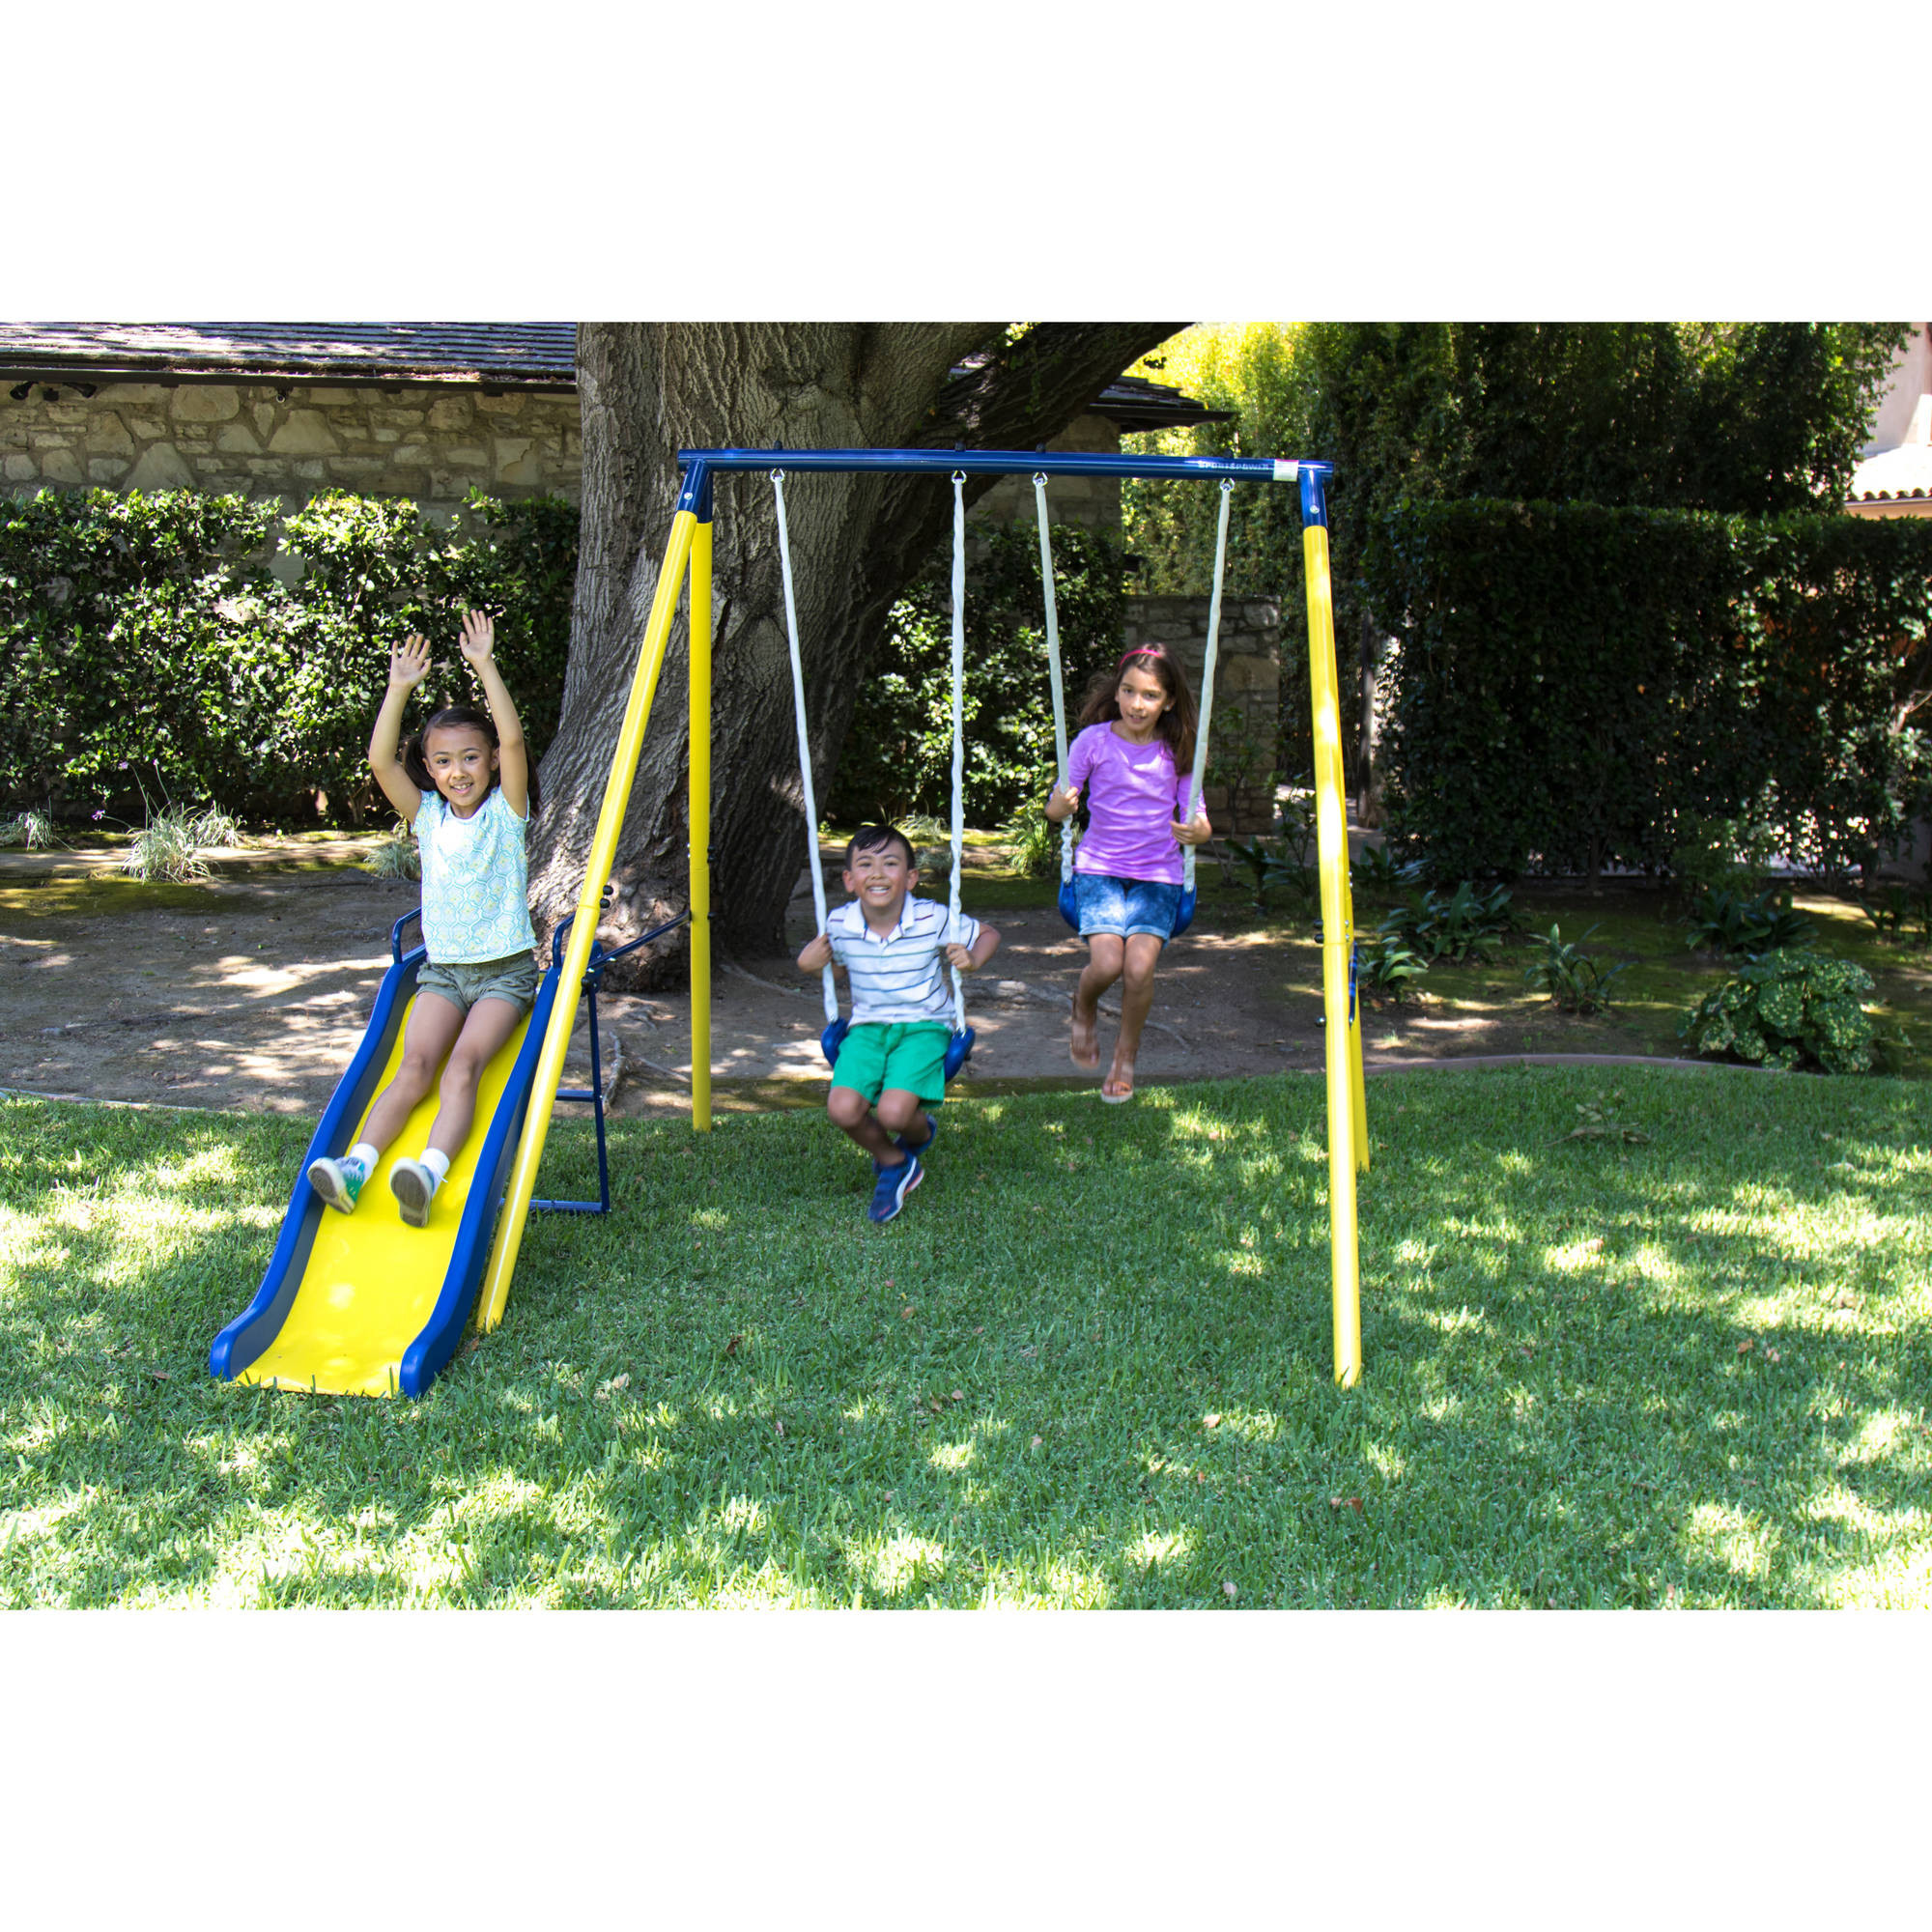 Kids Outdoor Playground Sets
 Sportspower Power Play Time Metal Swing Set Outdoor Kids